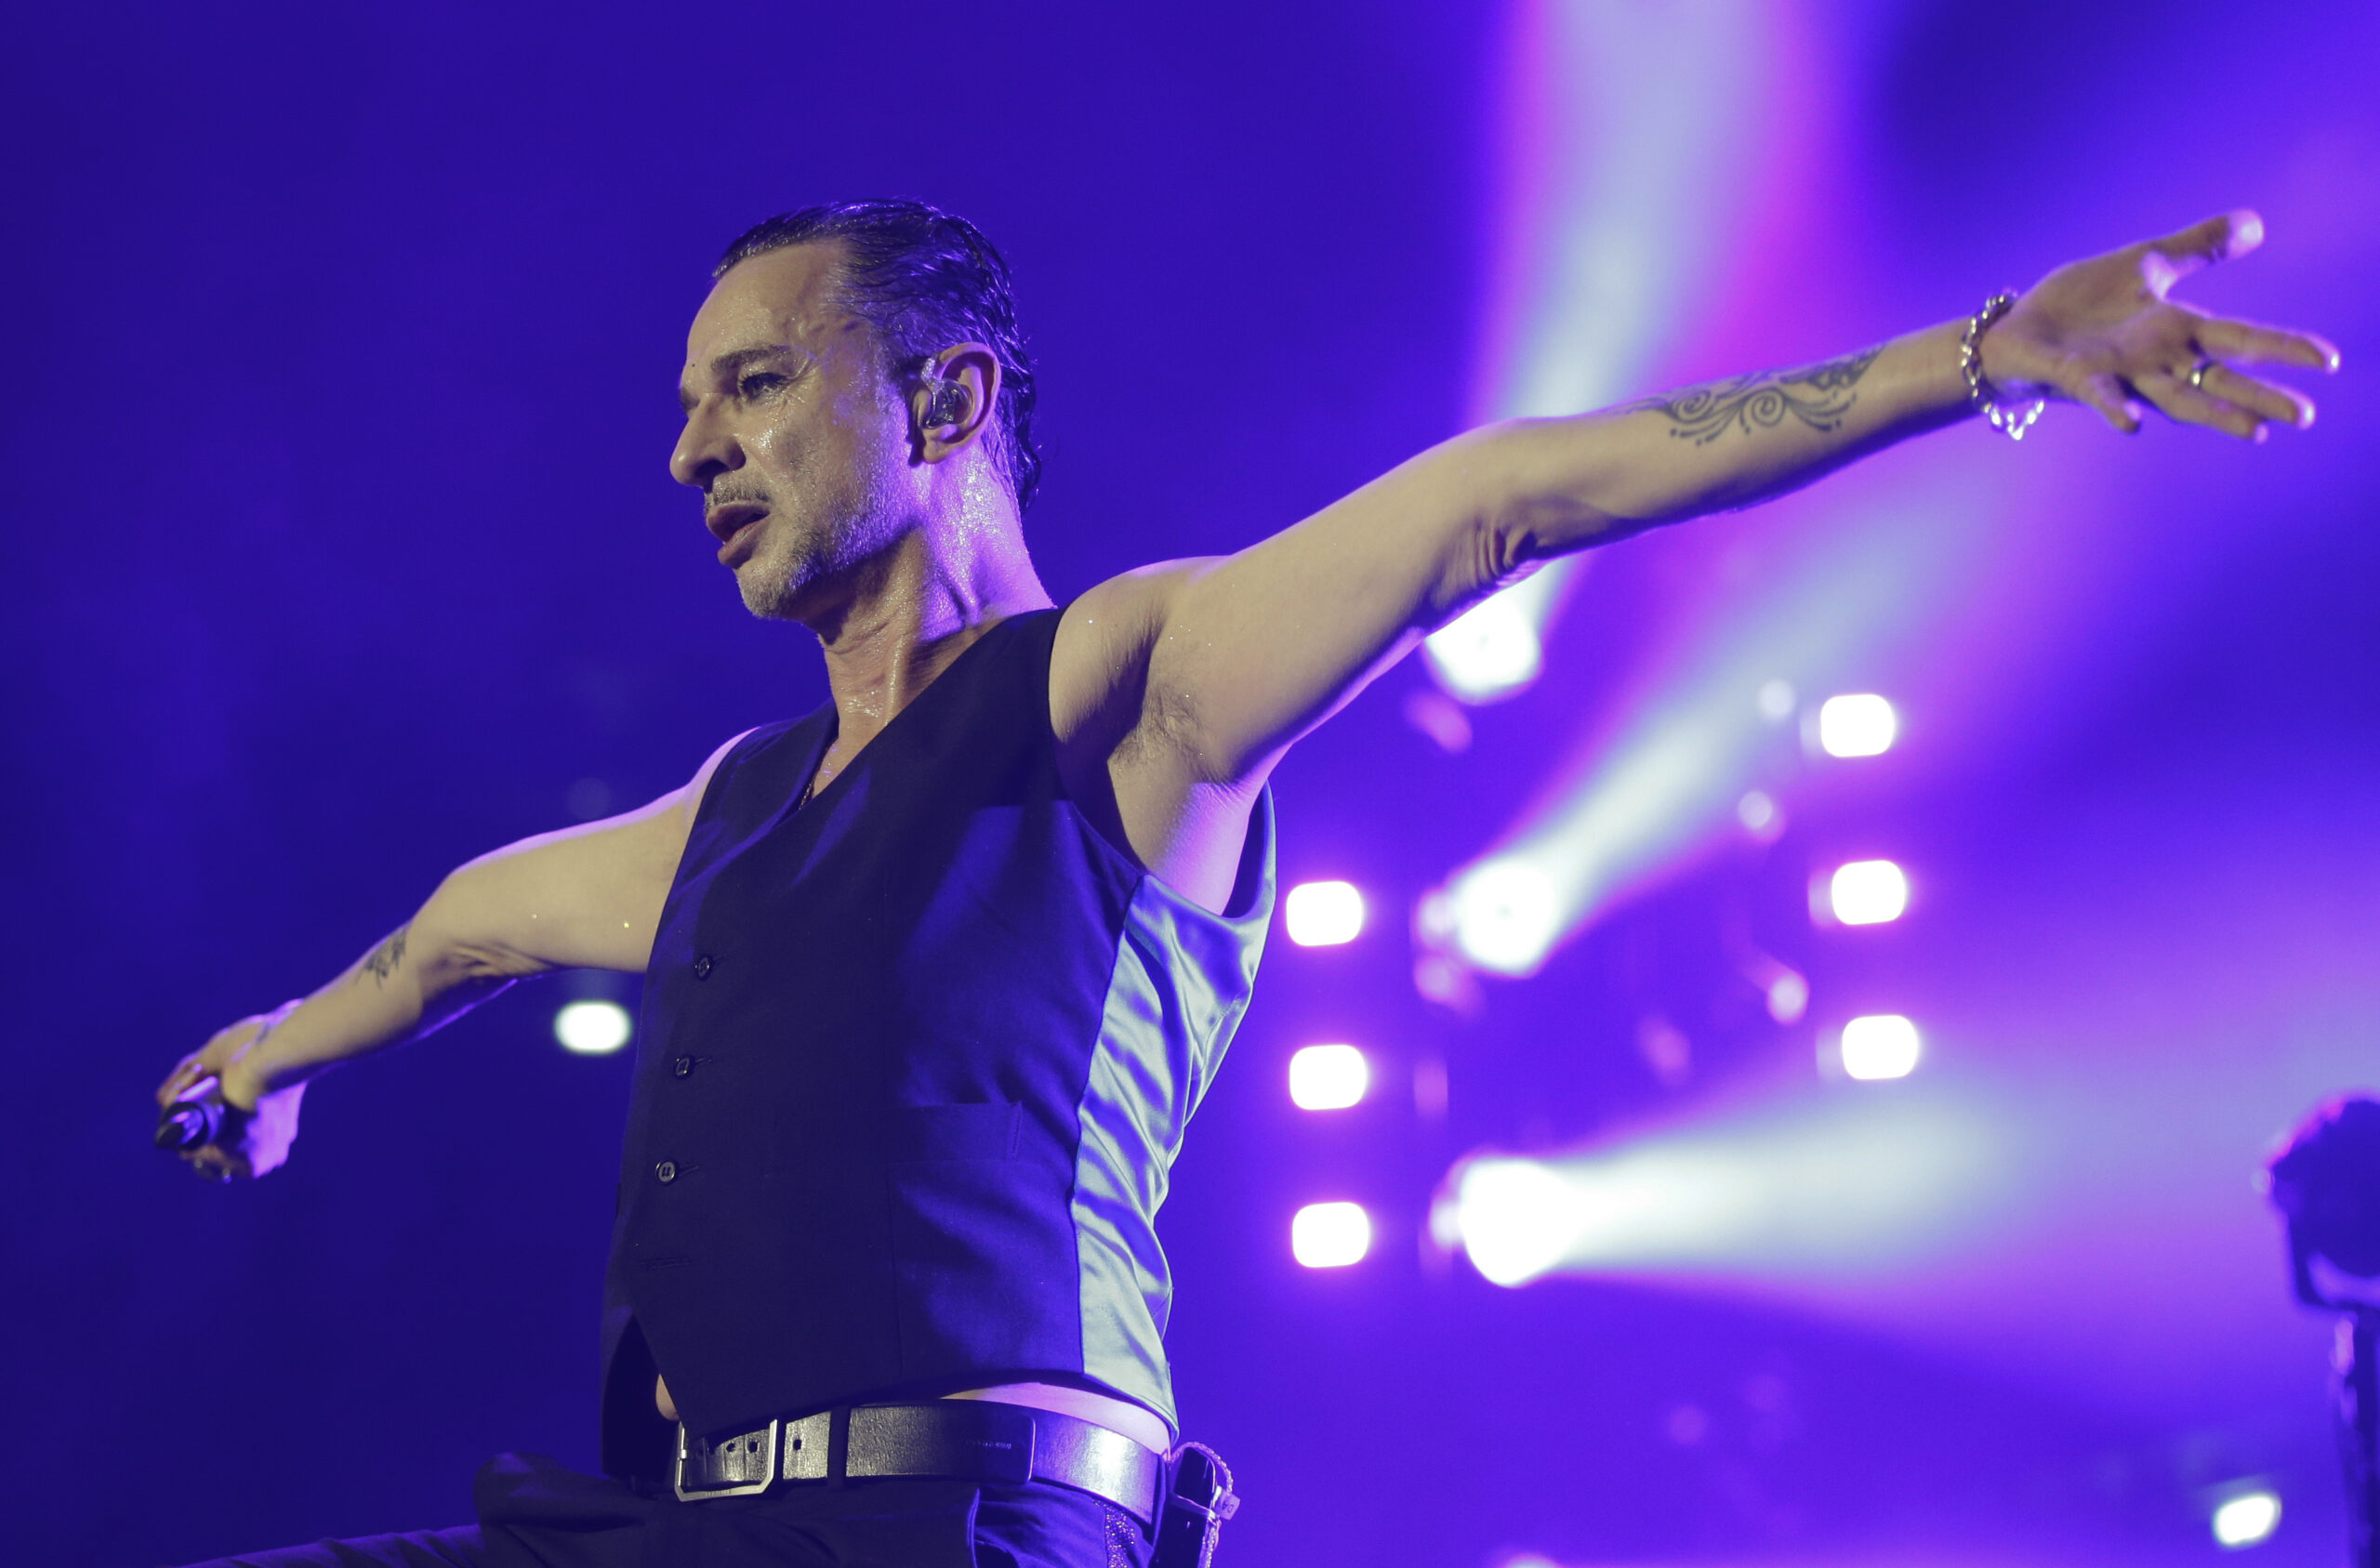 Memento Mori: Ακούστε το νέο άλμπουμ των Depeche Mode που συνεχίζουν μετά τον θάνατο του Fletch